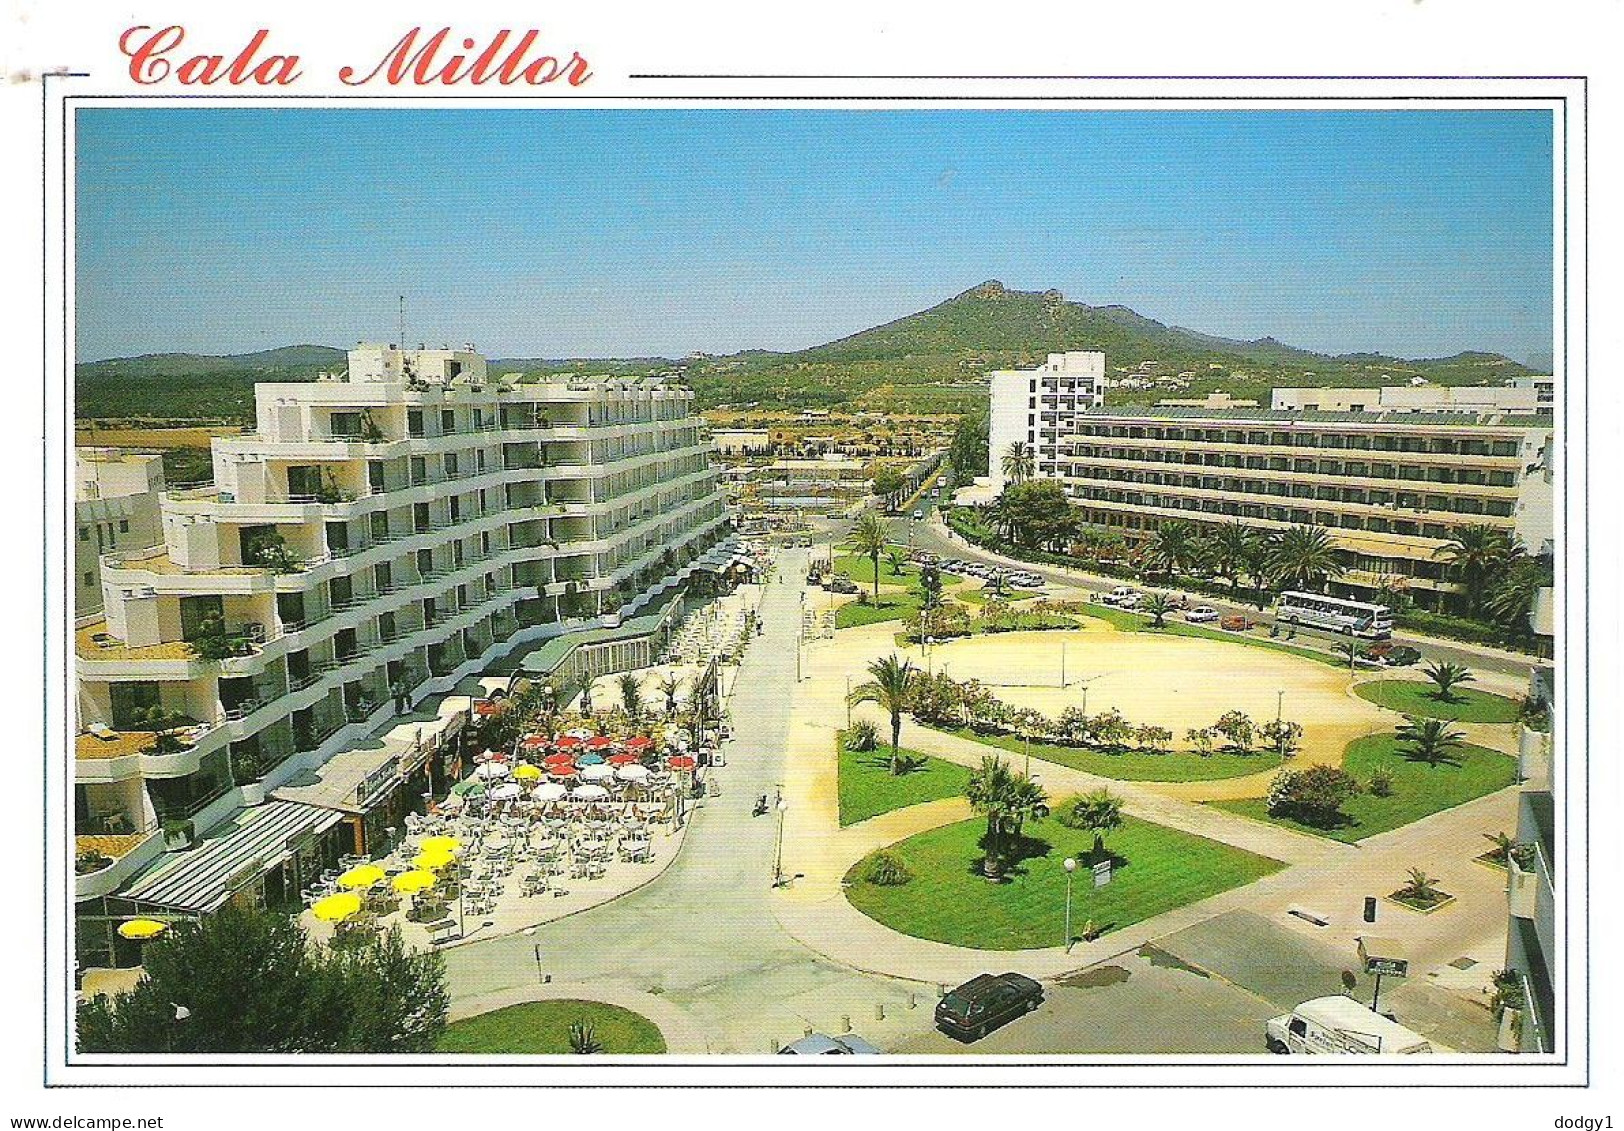 CALA MILLOR, MALLORCA, BALEARIC ISLANDS, SPAIN. UNUSED POSTCARD Ms9 - Mallorca